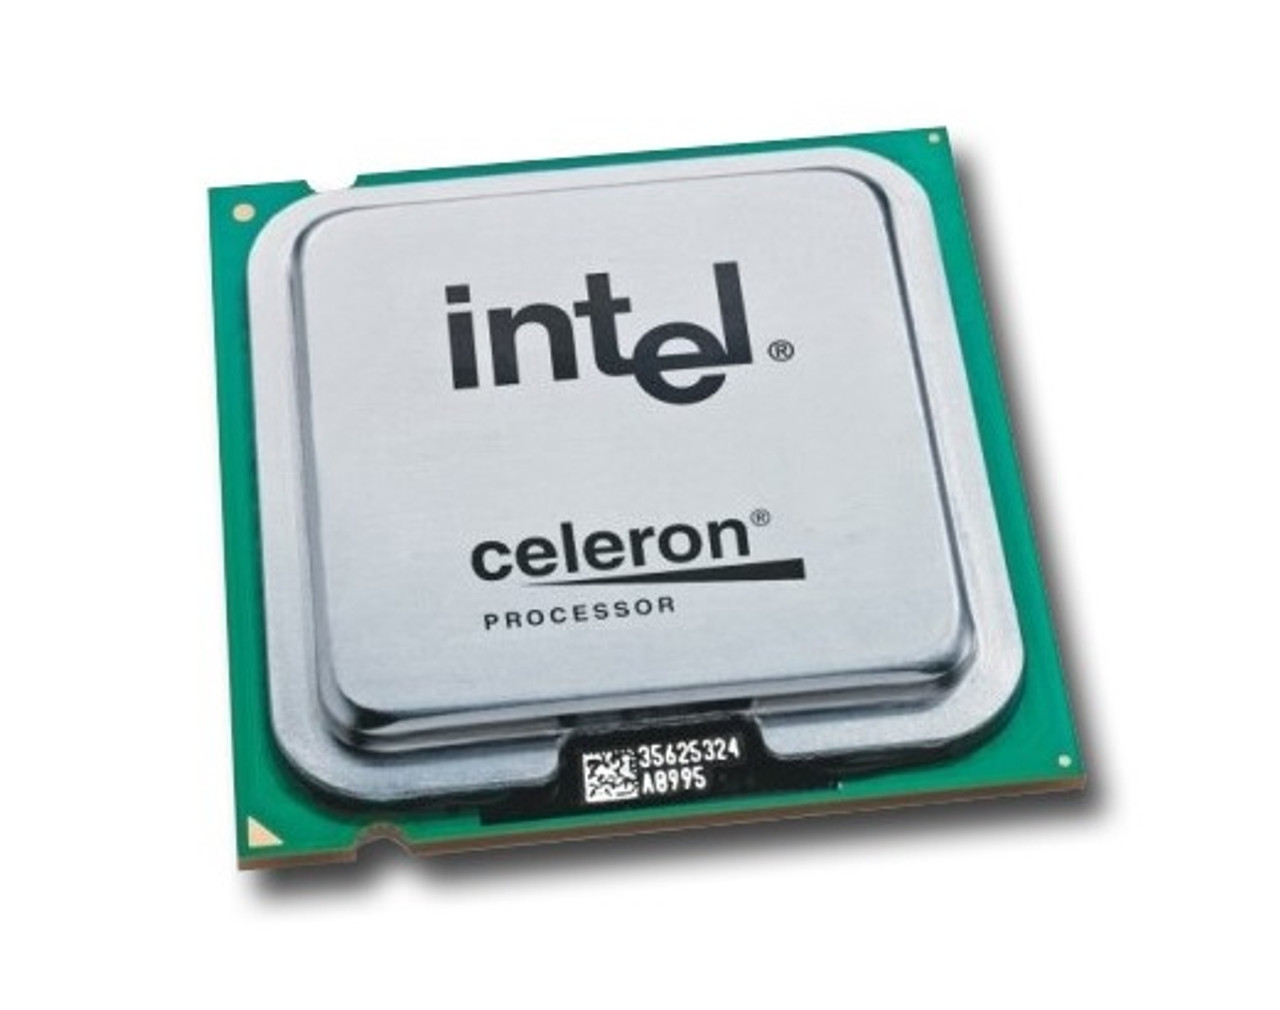 JM80547RE083256 - Intel Celeron D 345J 3.06GHz 533MHz FSB 256KB L2 Cache Socket 775 Processor